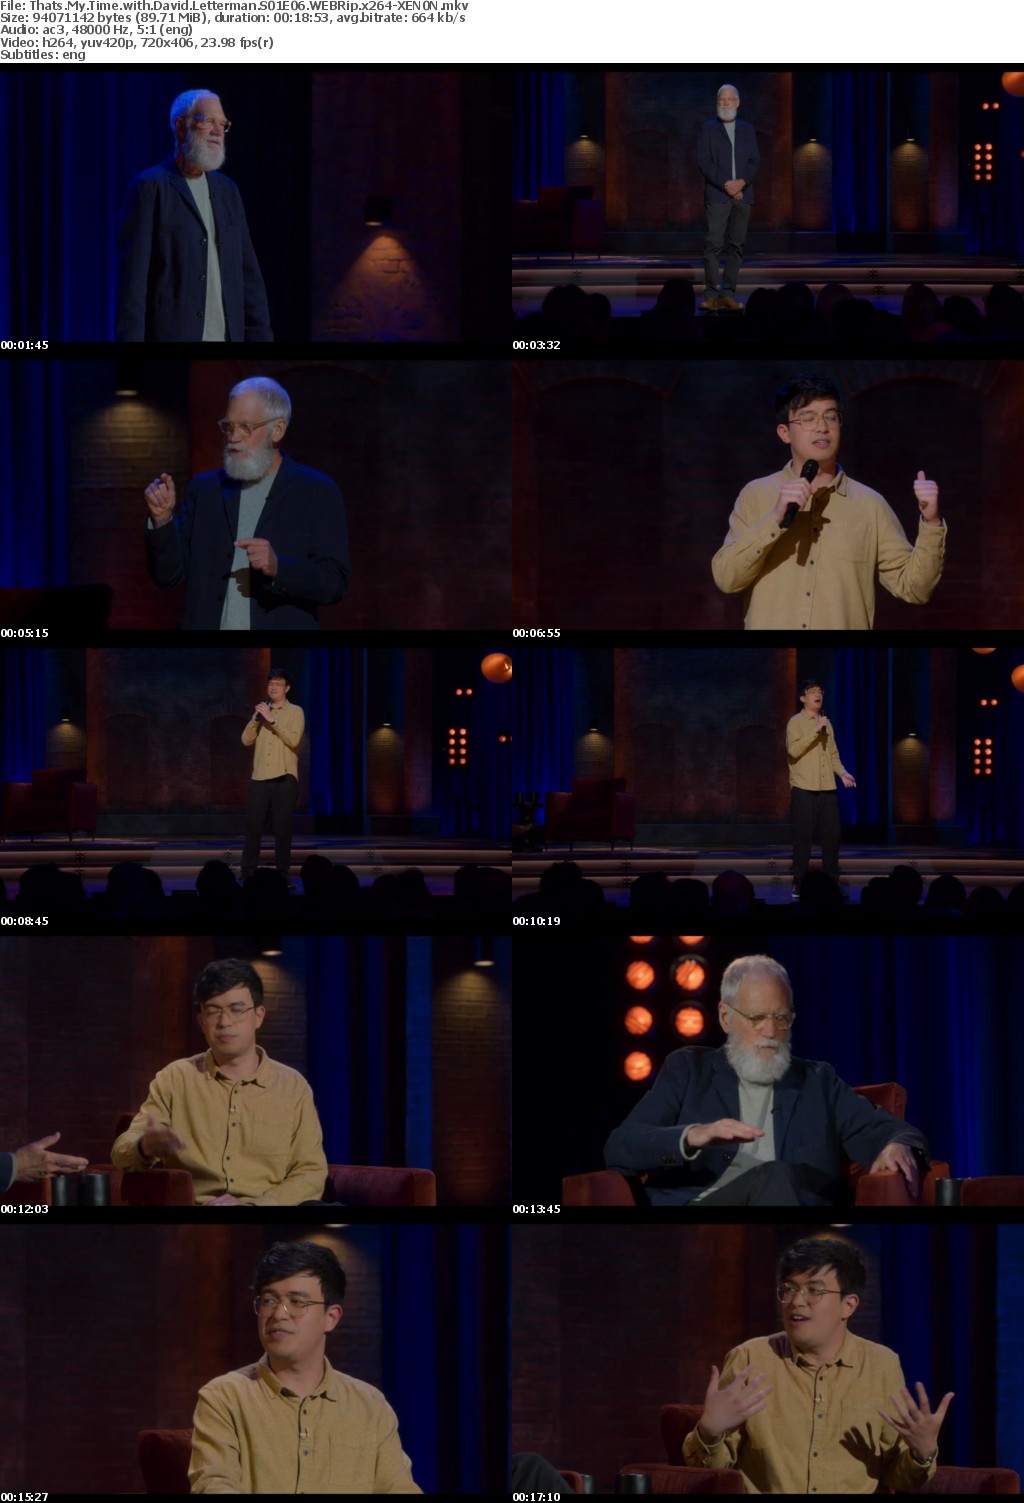 Thats My Time with David Letterman S01E06 WEBRip x264-XEN0N